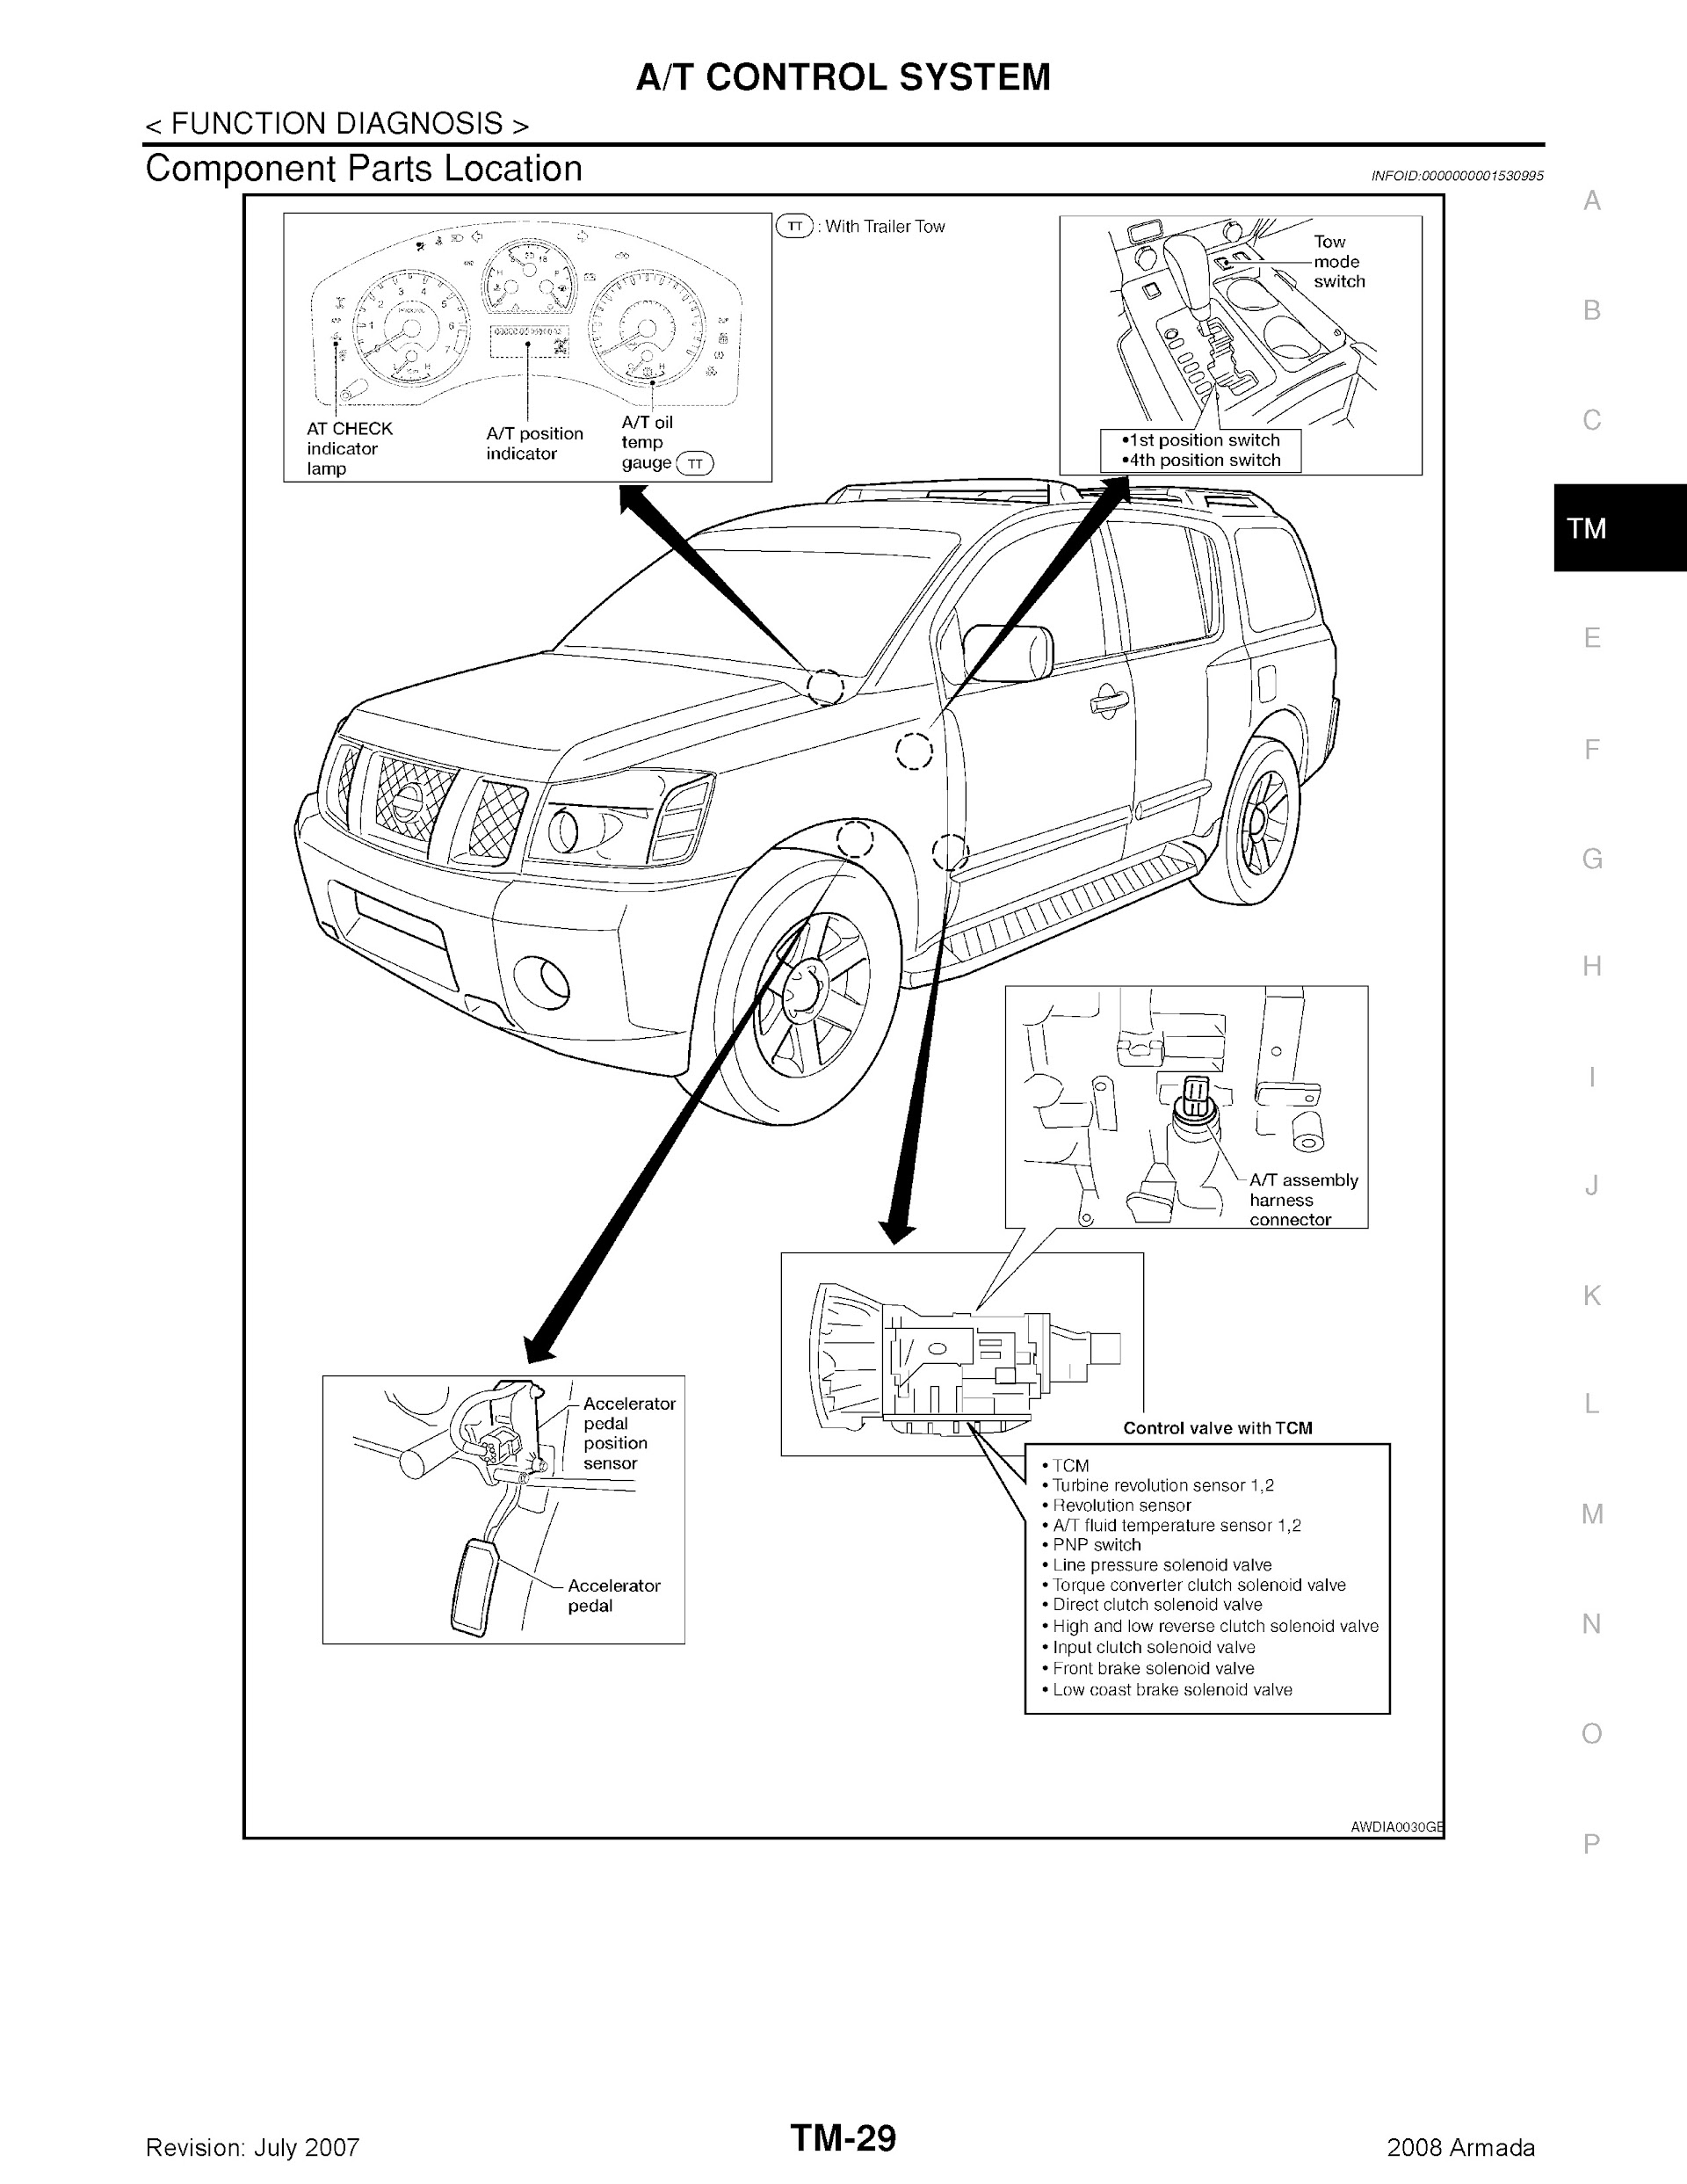 2008 Nissan Armada Repair Manual A/T Control System